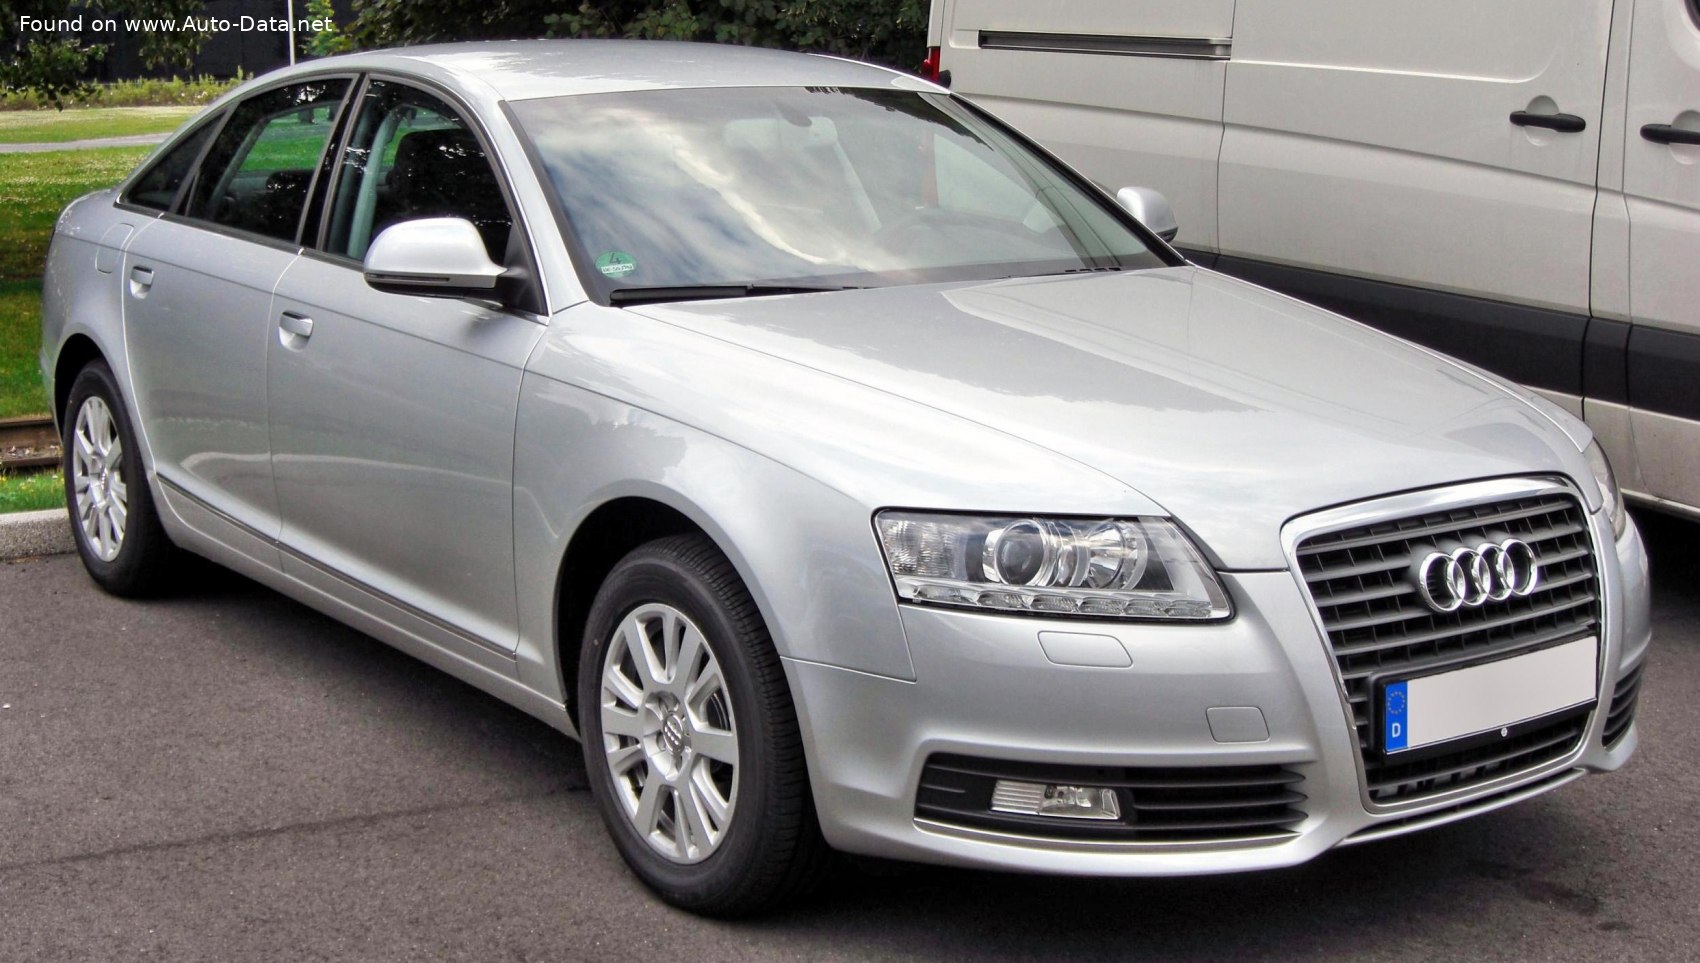 https://www.auto-data.net/images/f43/Audi-A6-4F-C6-facelift-2008.jpg